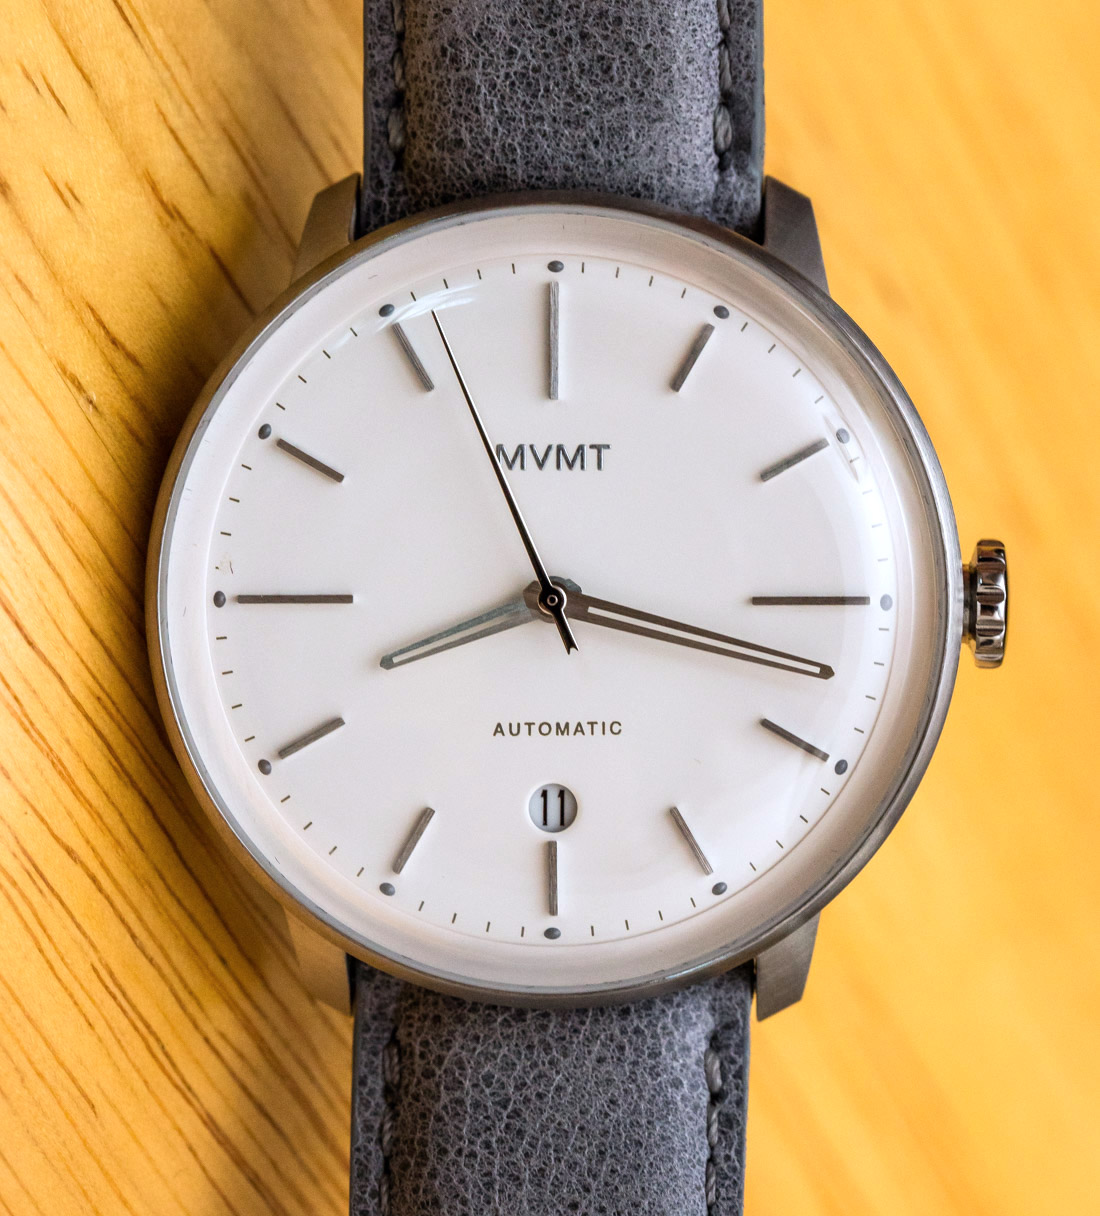 MVMT Arc Automatic Watch Review | aBlogtoWatch